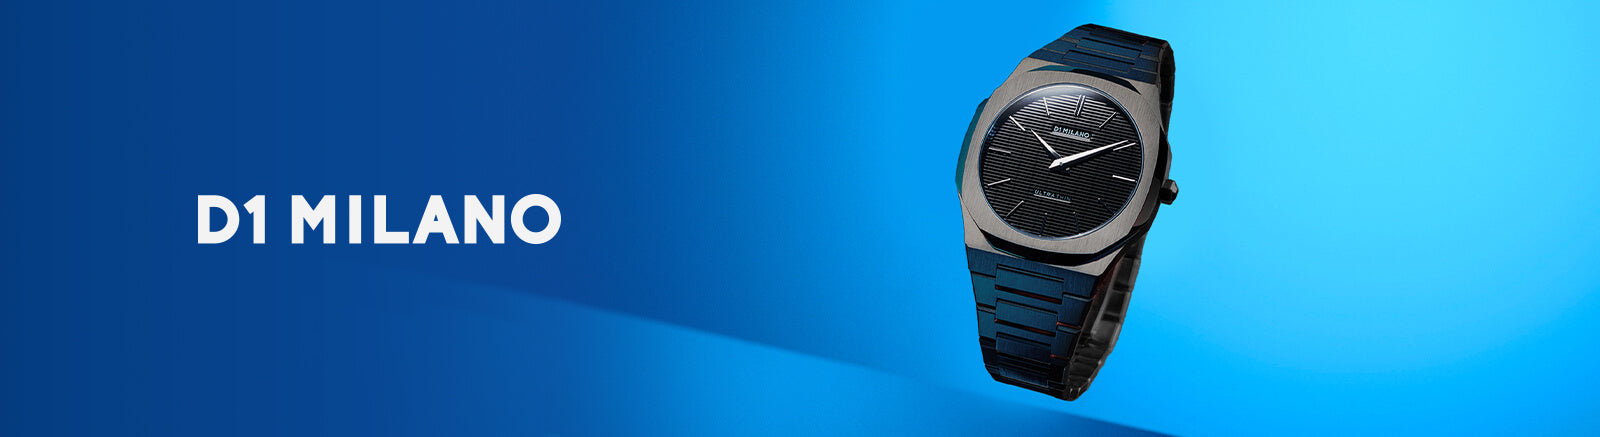 Buy D1 Milano Watches in Watch Republic Shop Now – Watch Republic PH